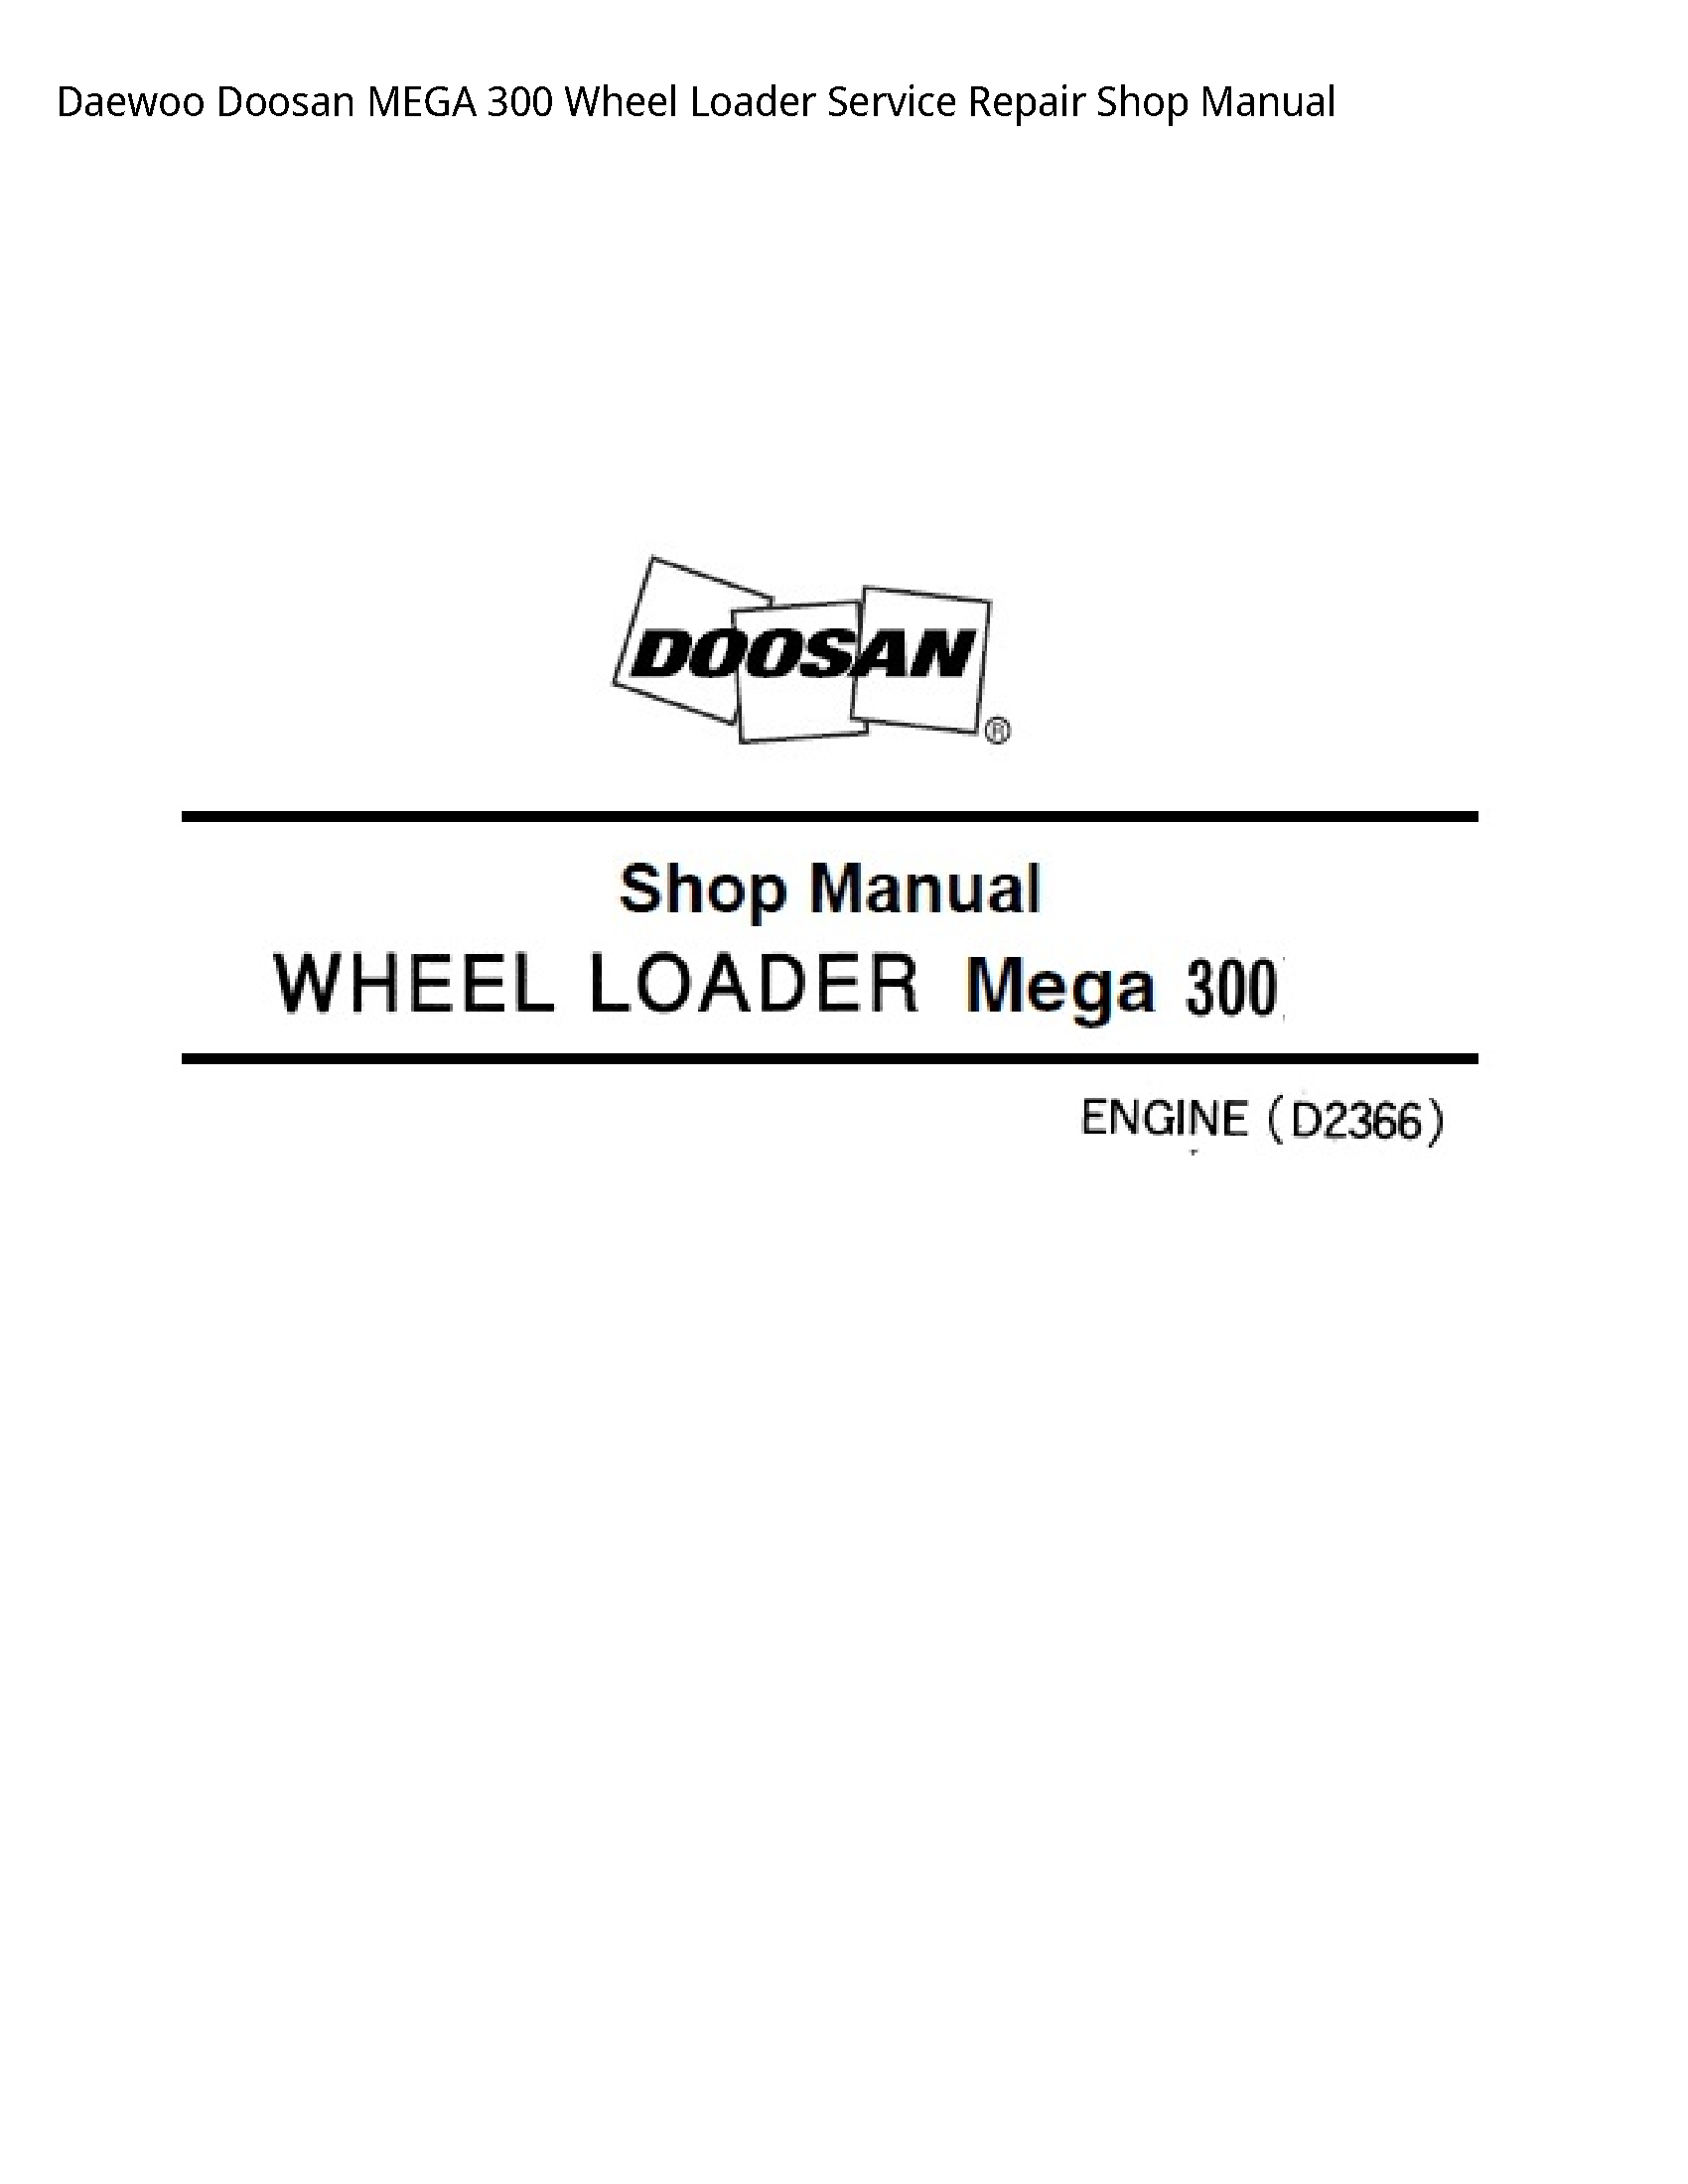 Daewoo Doosan 300 MEGA Wheel Loader manual